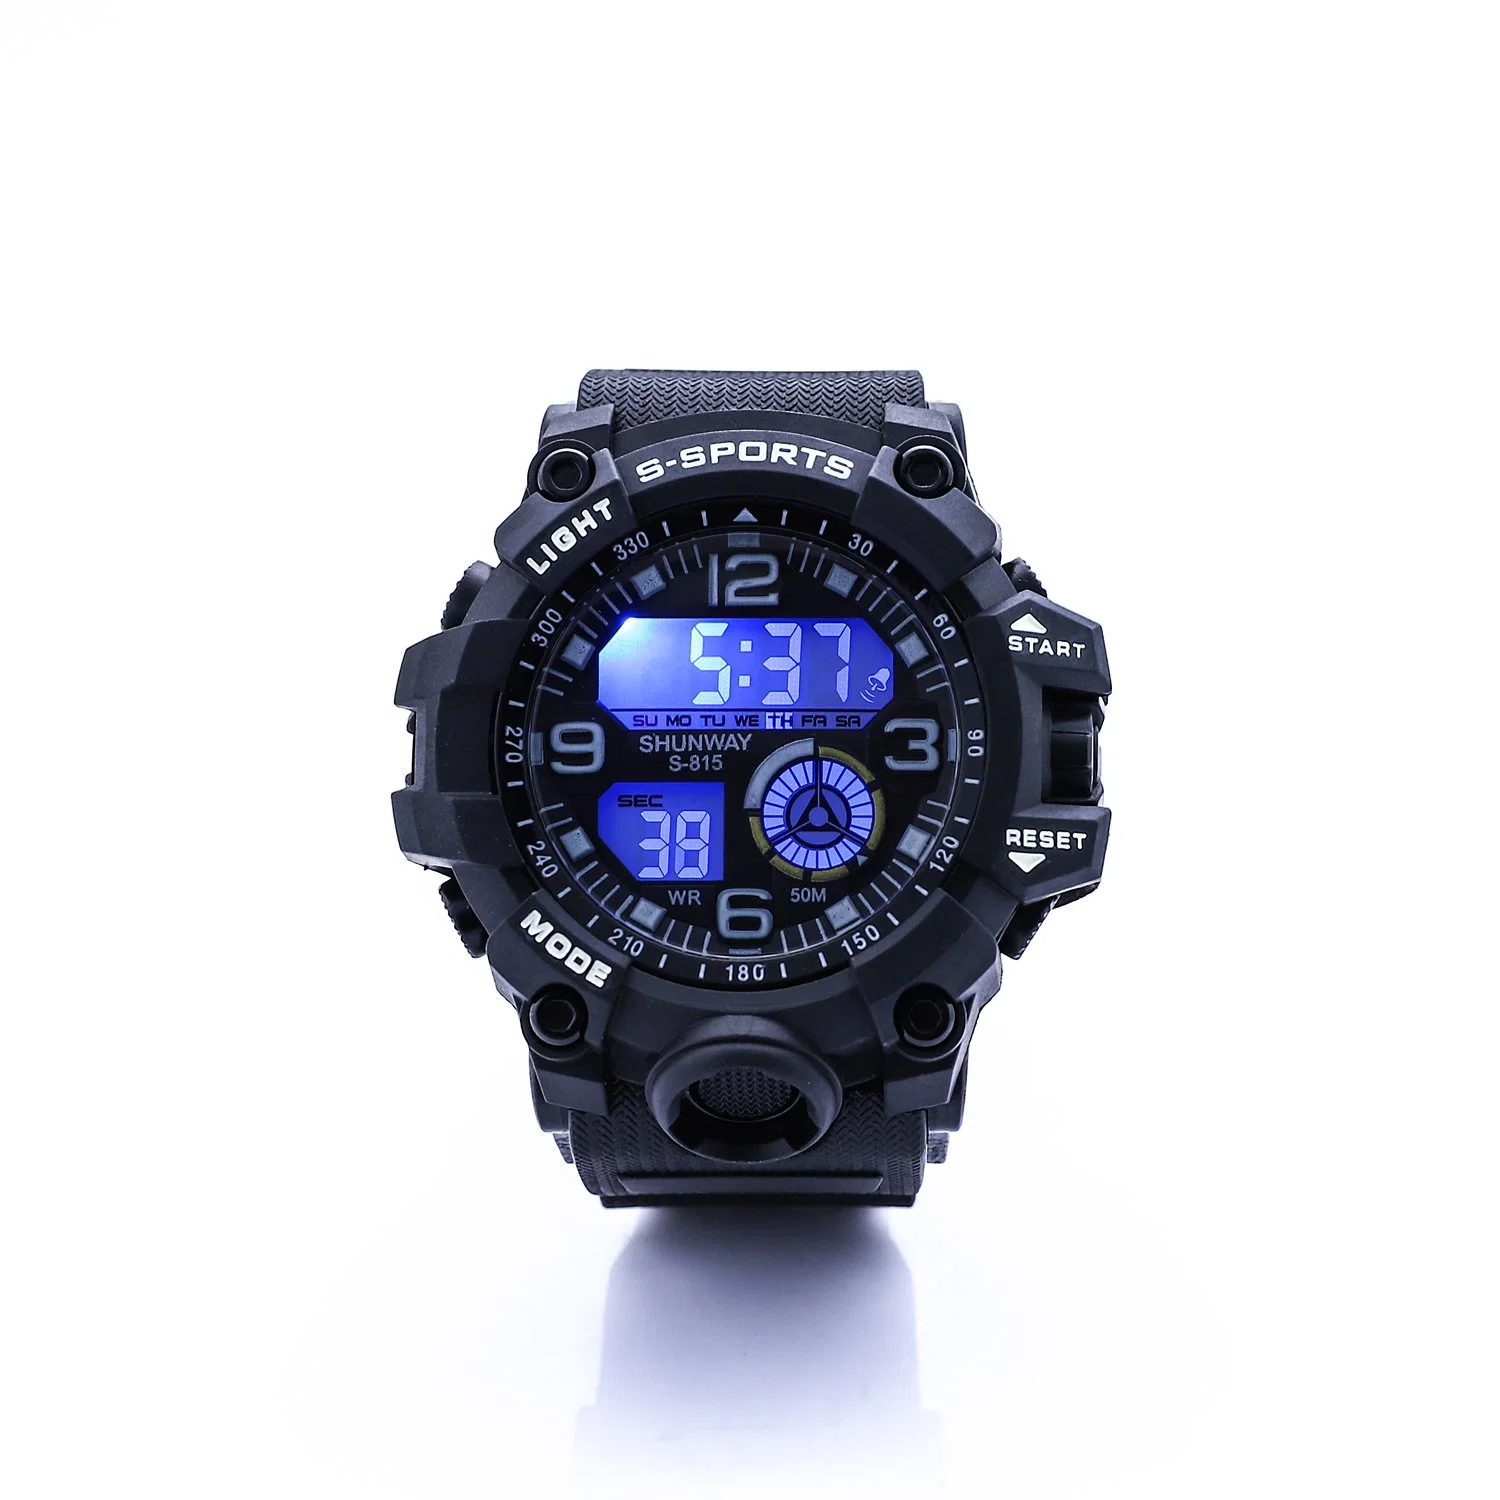 Fashion Men Digital Watches Sports 50m Waterproof Wrist Watches Smart Watch Gifts Japanese Movement Watches Watches Digital Watch